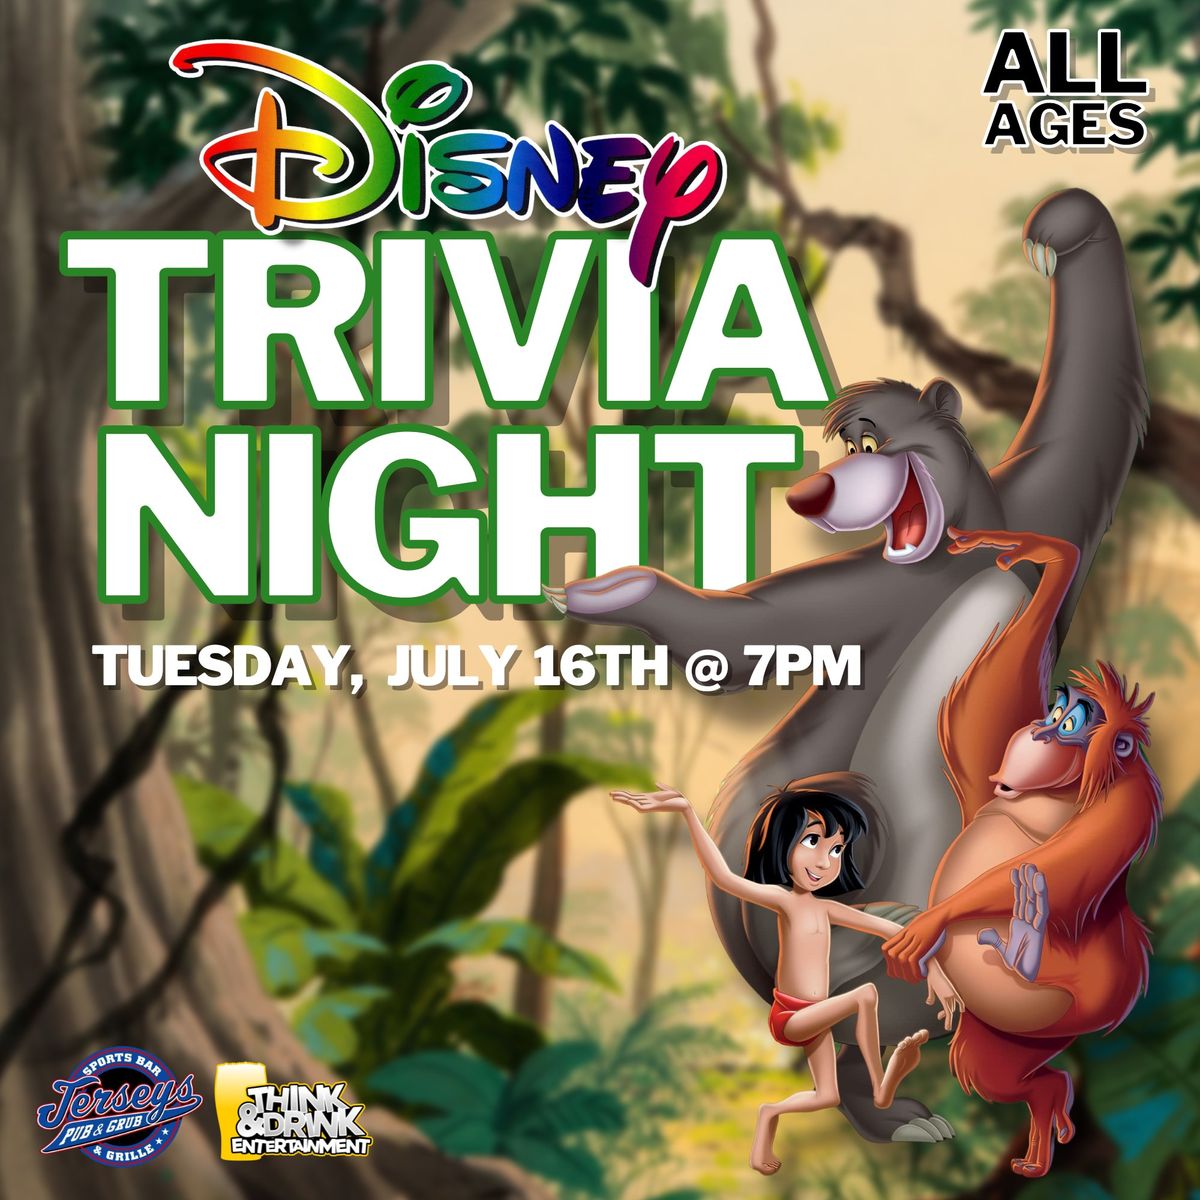 Disney Trivia Night @ Jerseys Pub and Grub (Cedar Rapids, IA) \/ Tuesday, July 16th @ 7pm